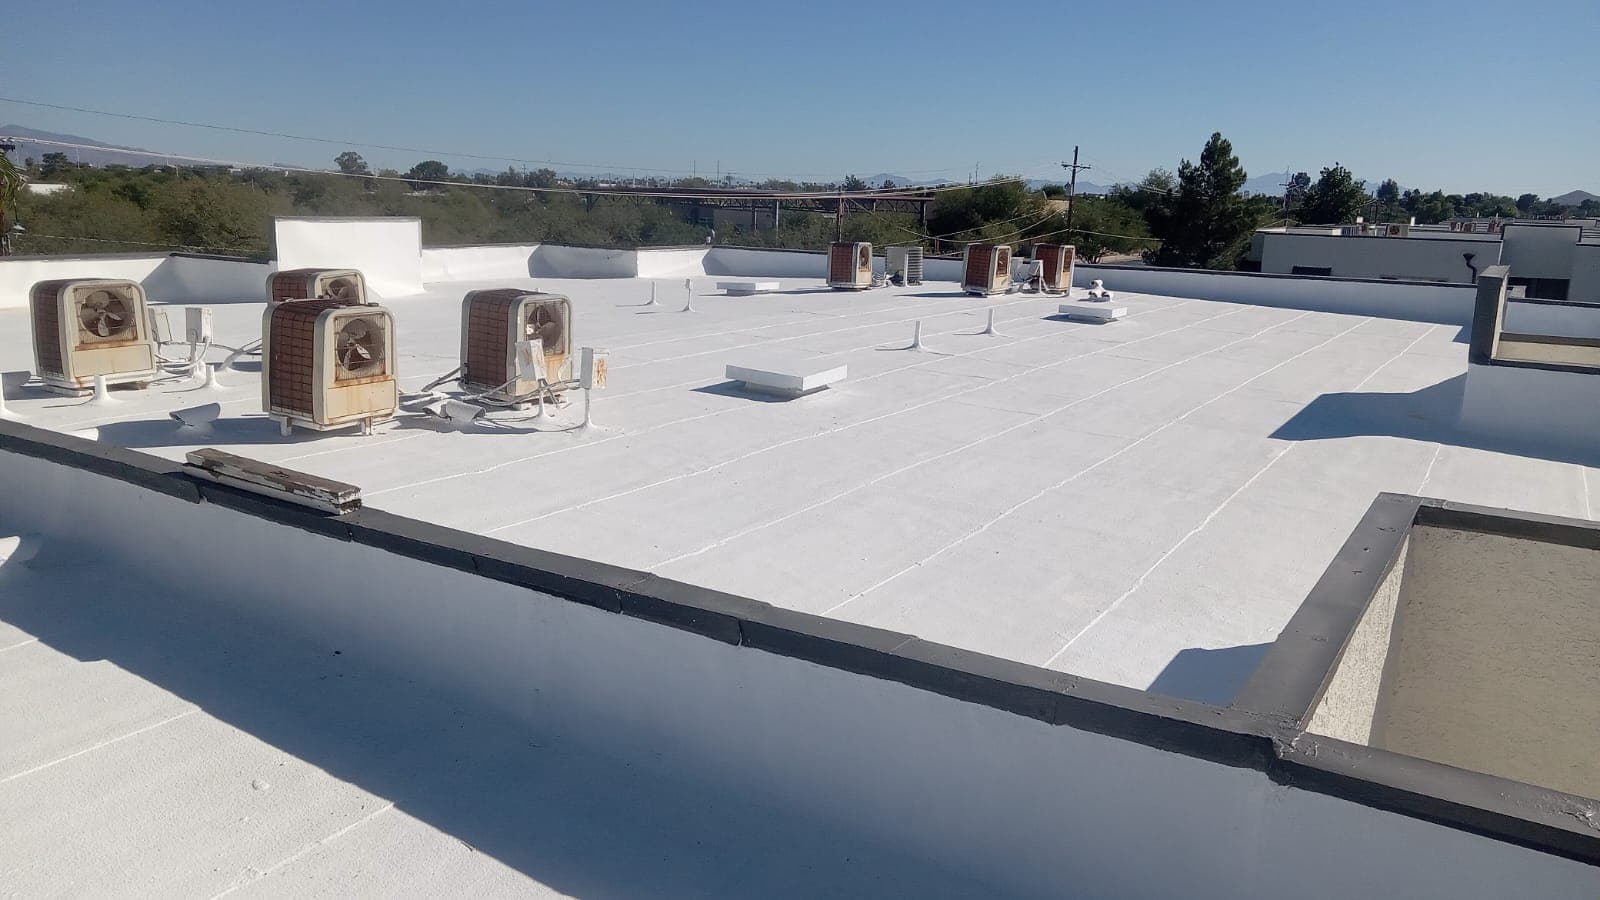 Protective coating layers visibly enhancing a Mesa rooftop's appearance.